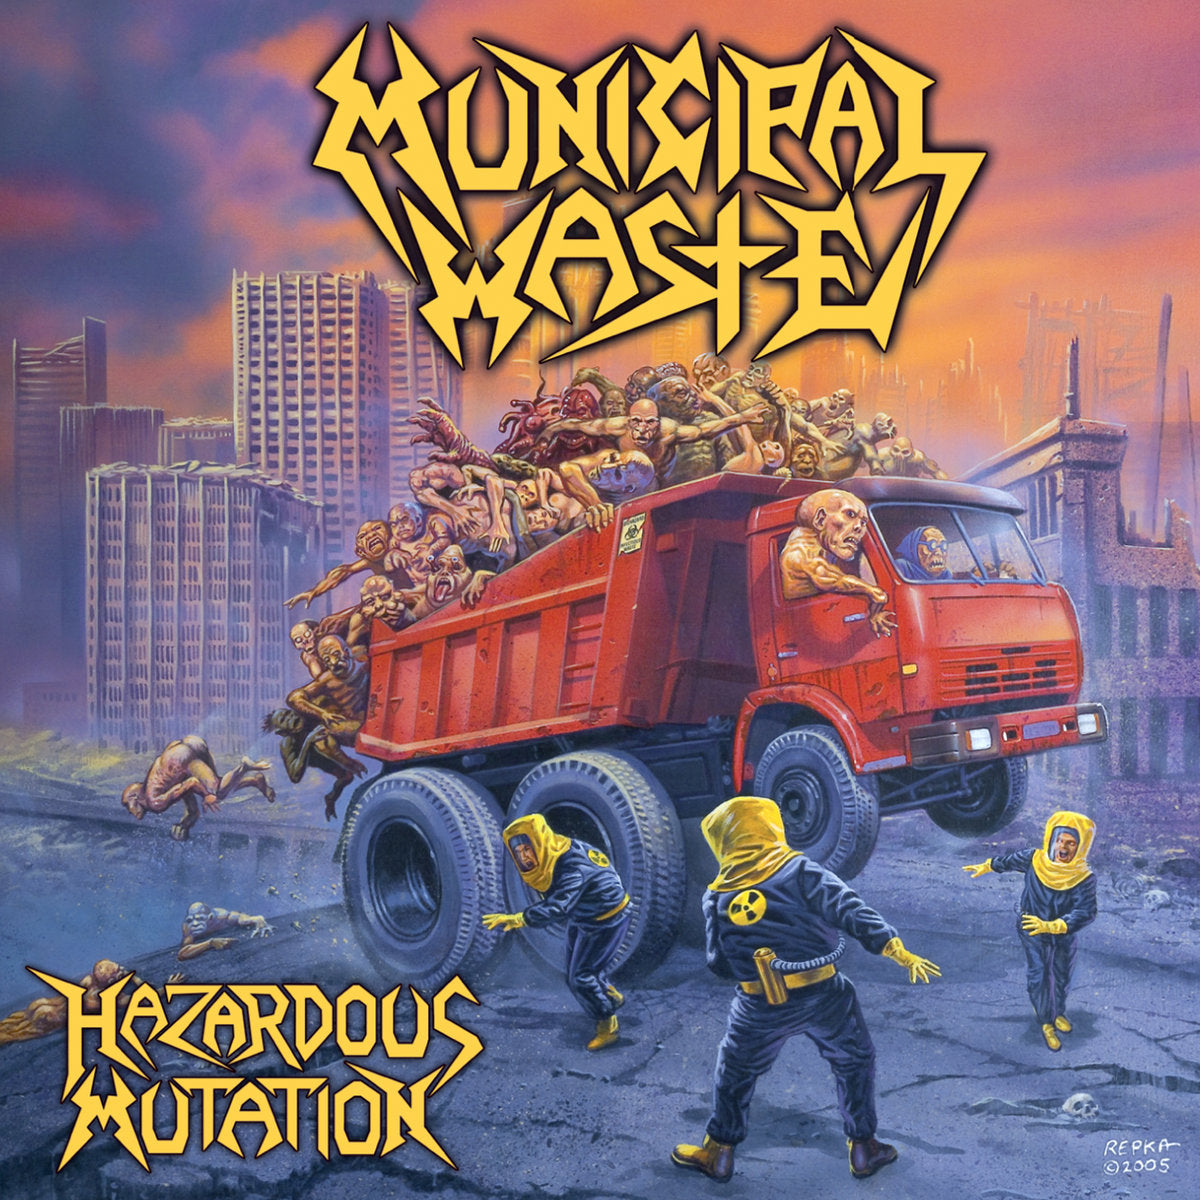 Municipal Waste "Hazardous Mutation" Digipak CD